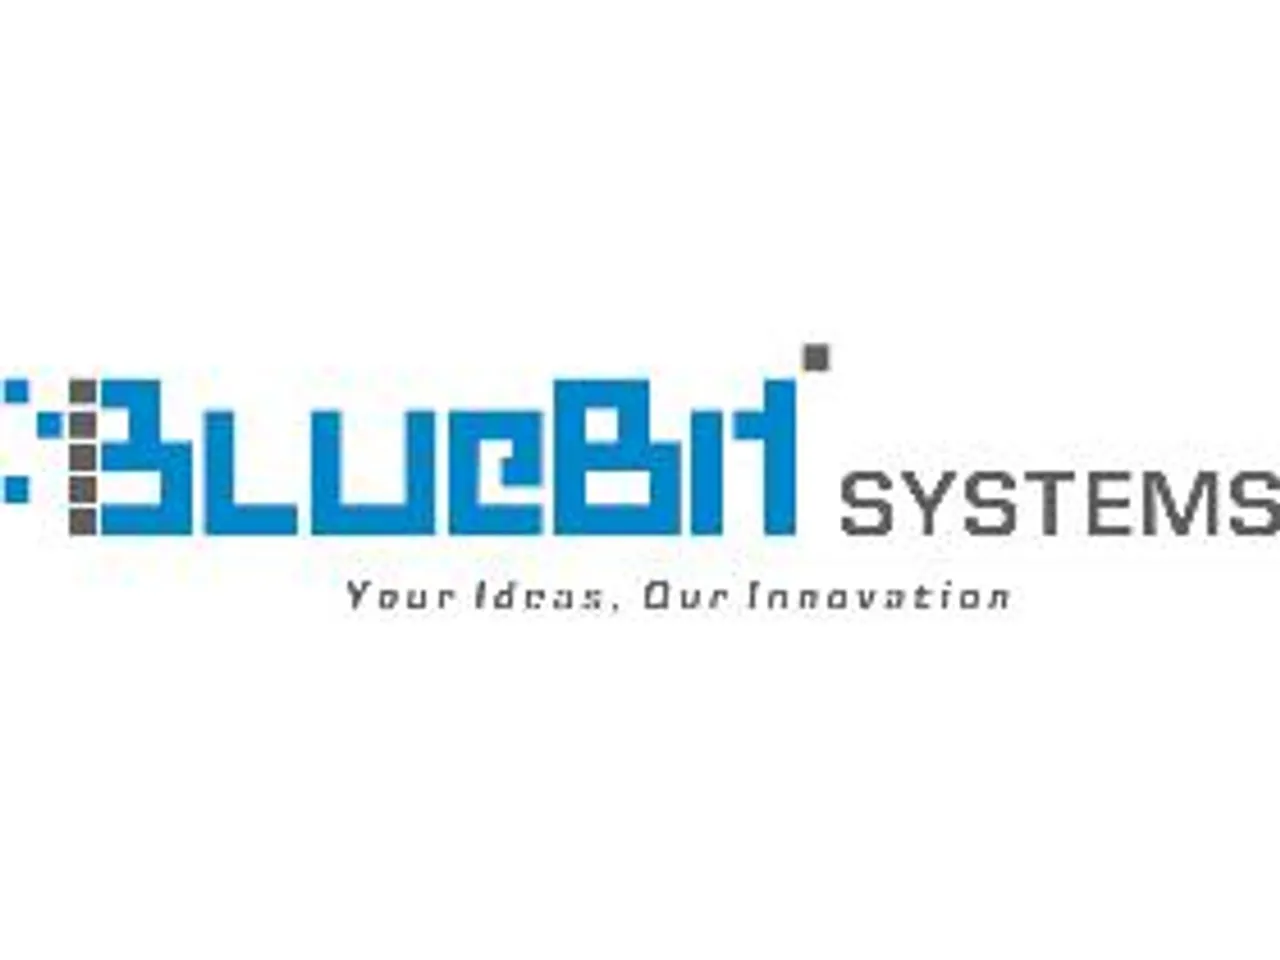 bluebit systems